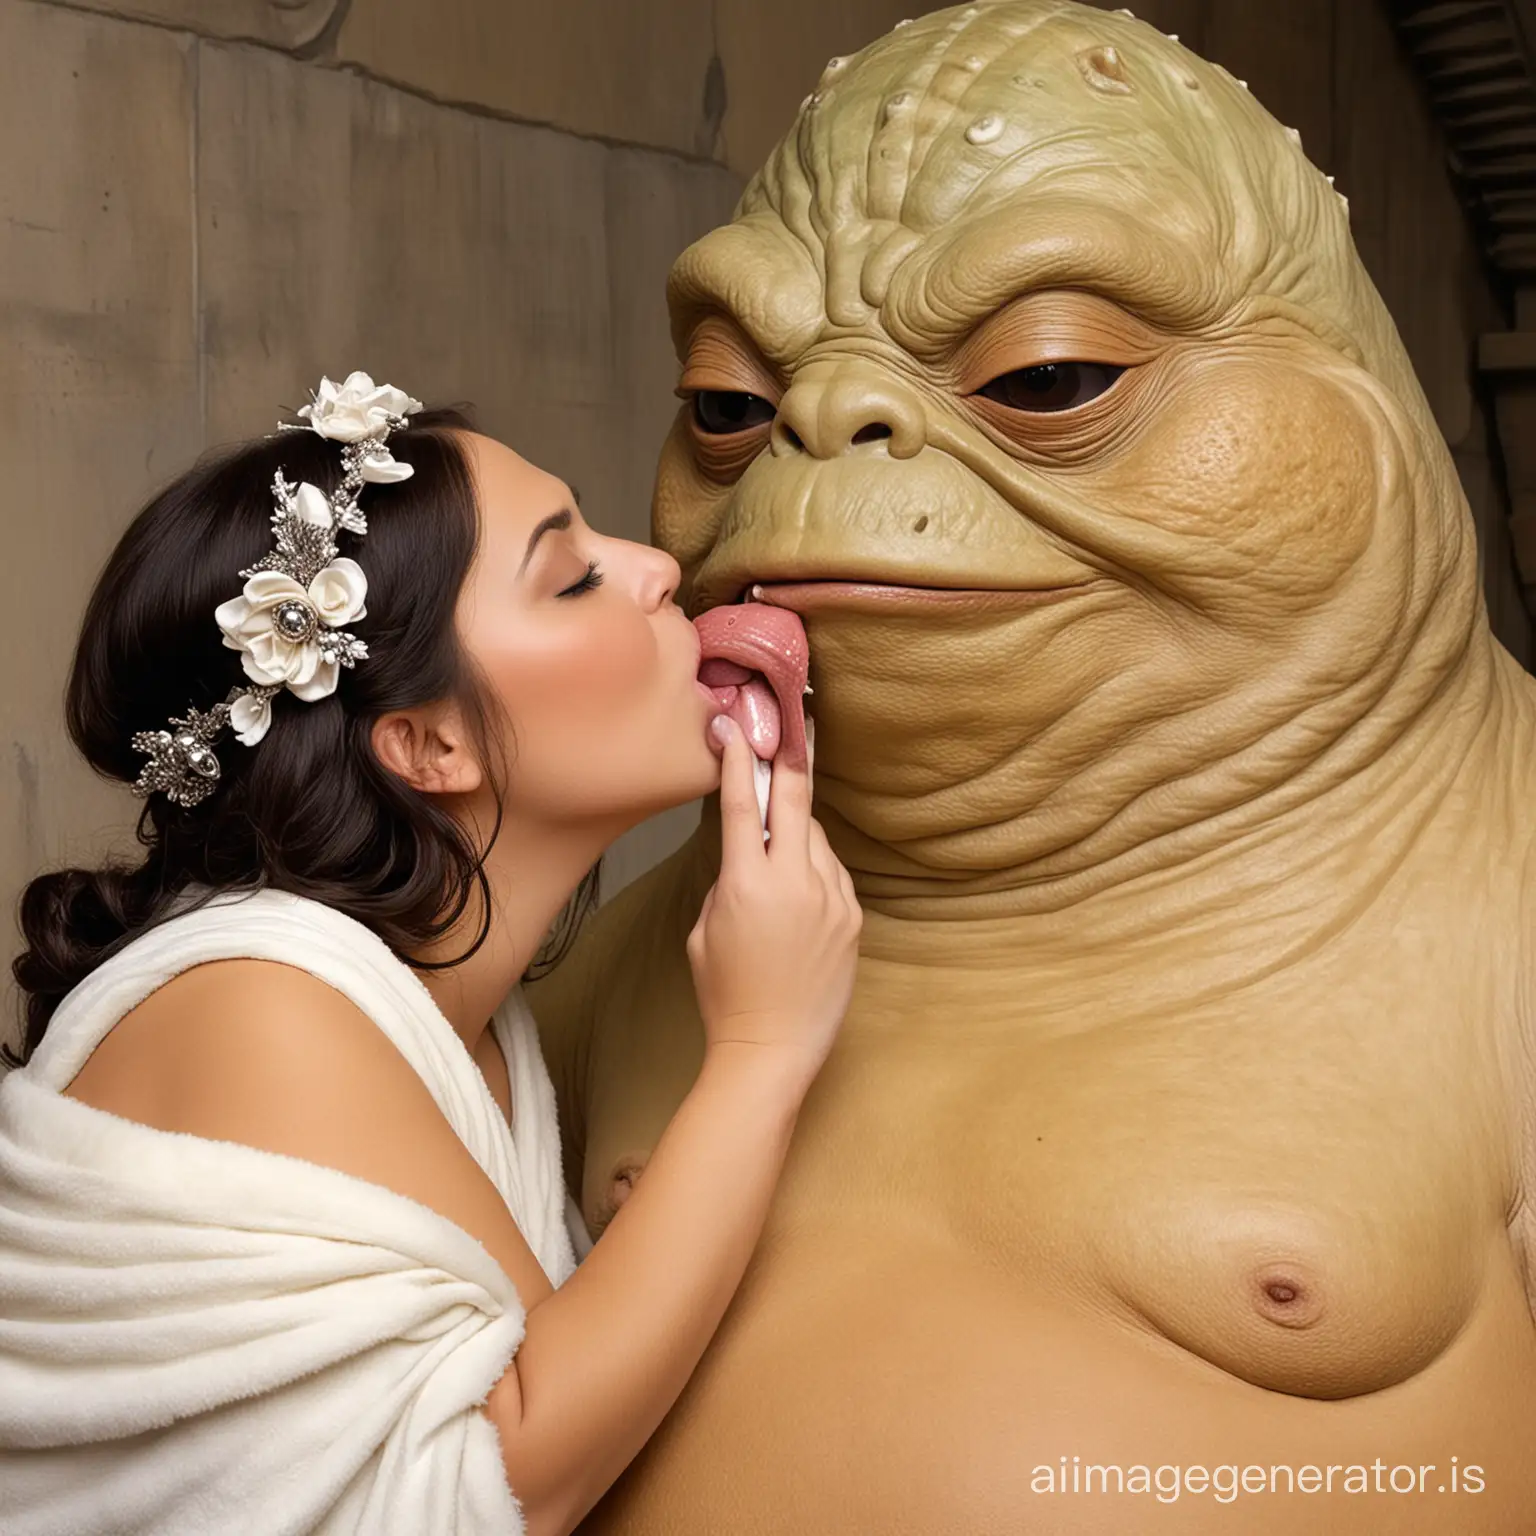 Jabba-the-Hutt-Enjoying-an-Arctic-Treat-with-an-Eskimo-Princess